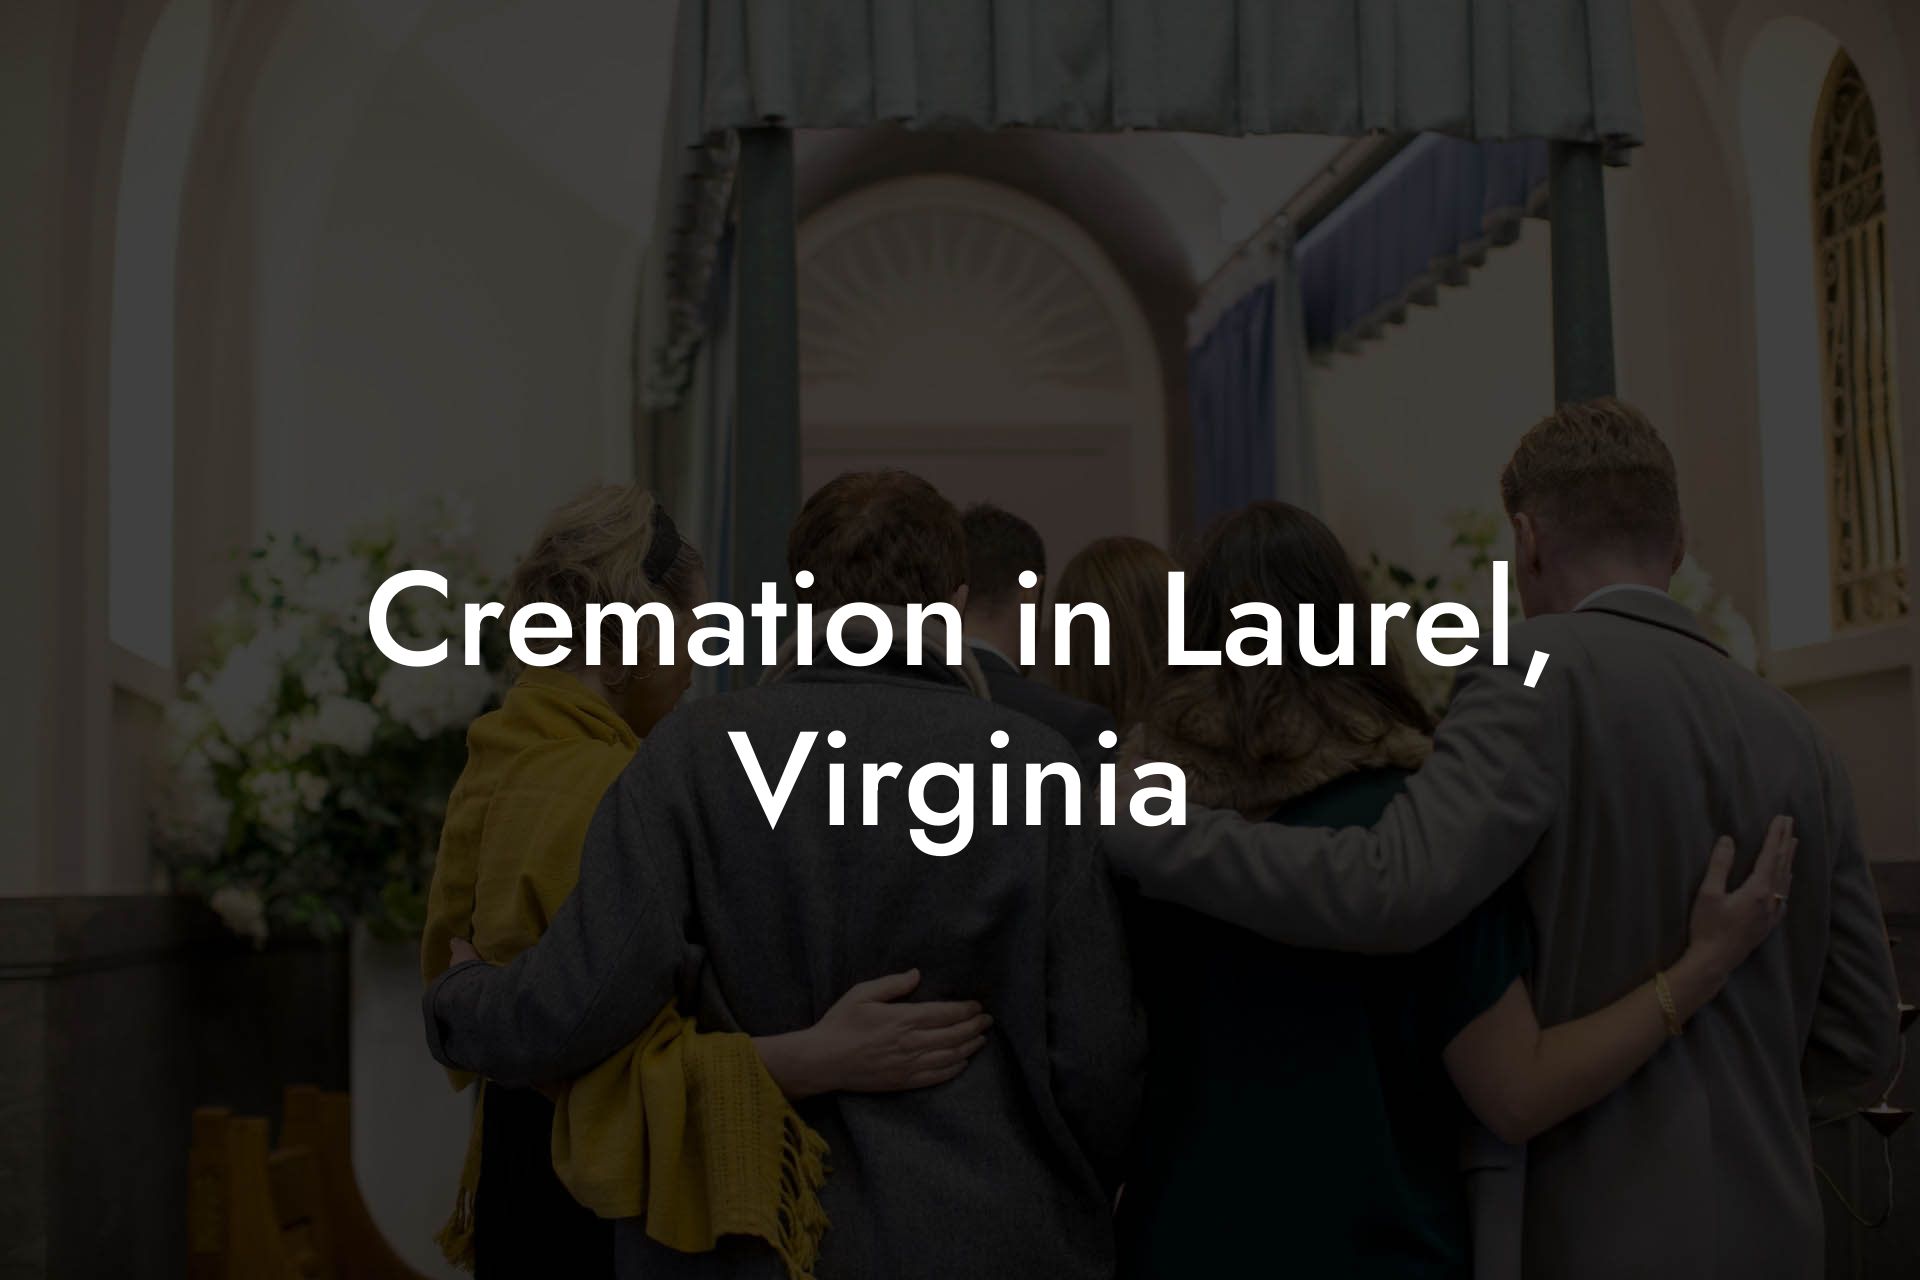 Cremation in Laurel, Virginia